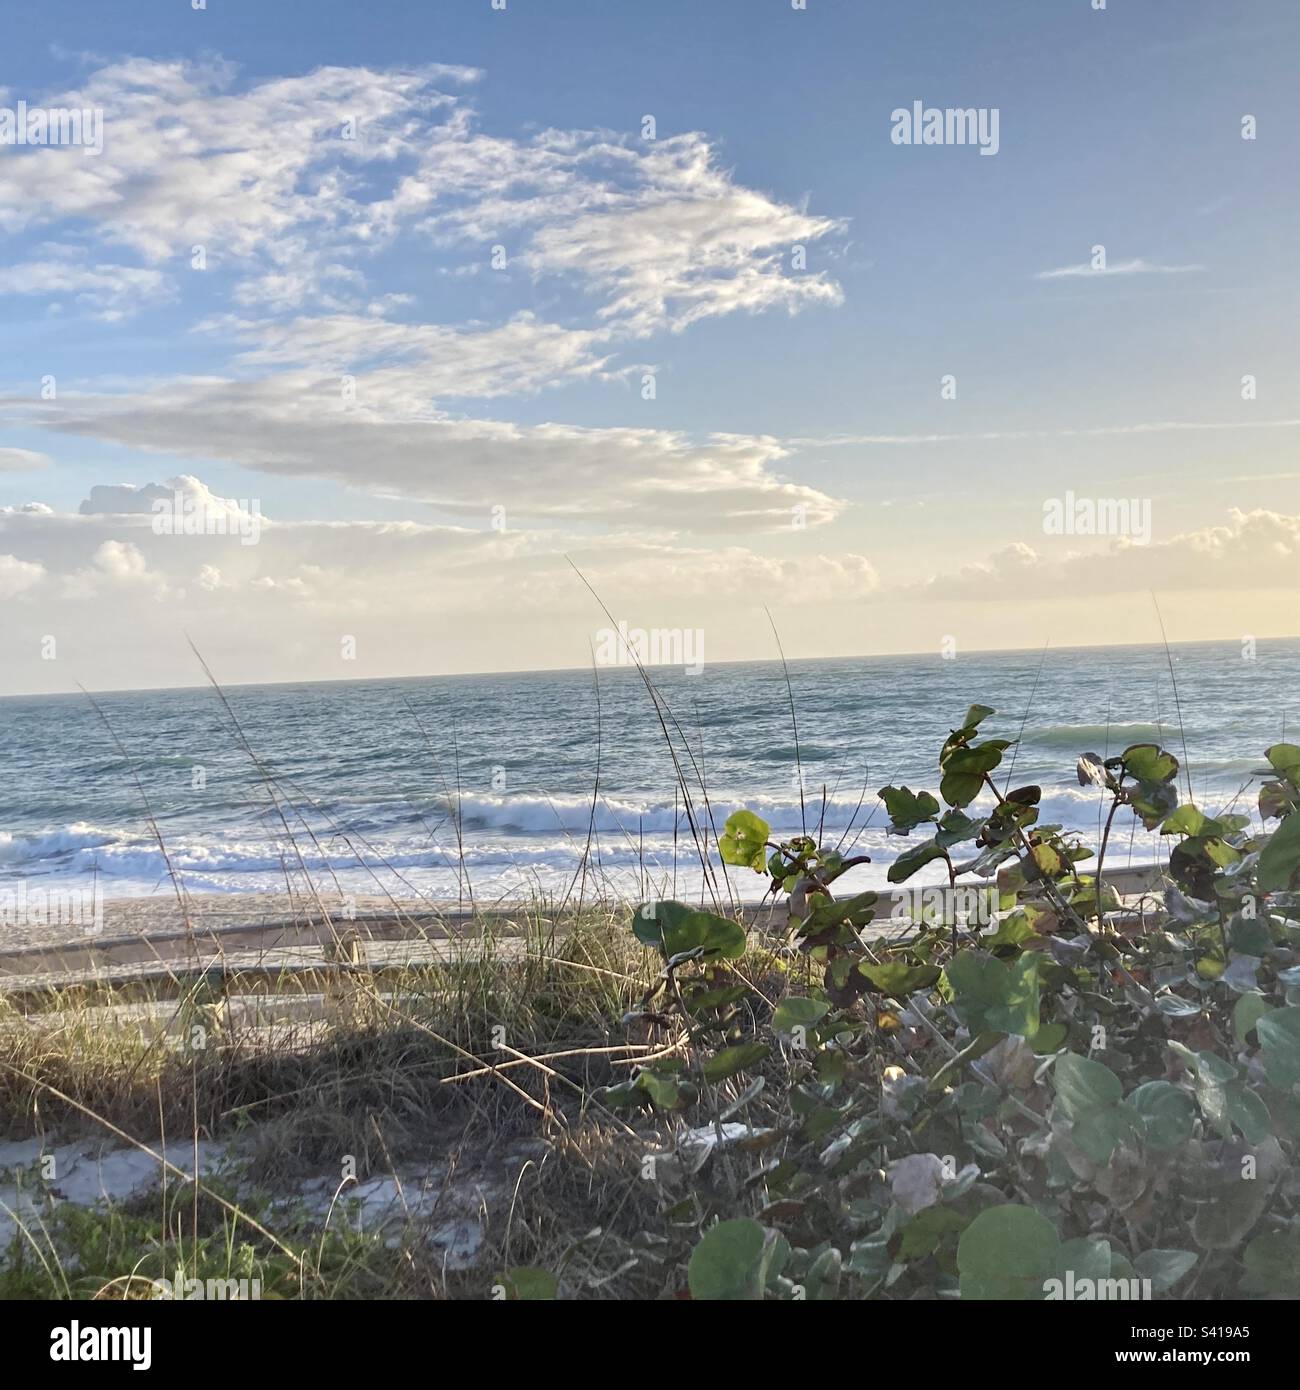 Florida coastline looking over sand dunes. Stock Photo